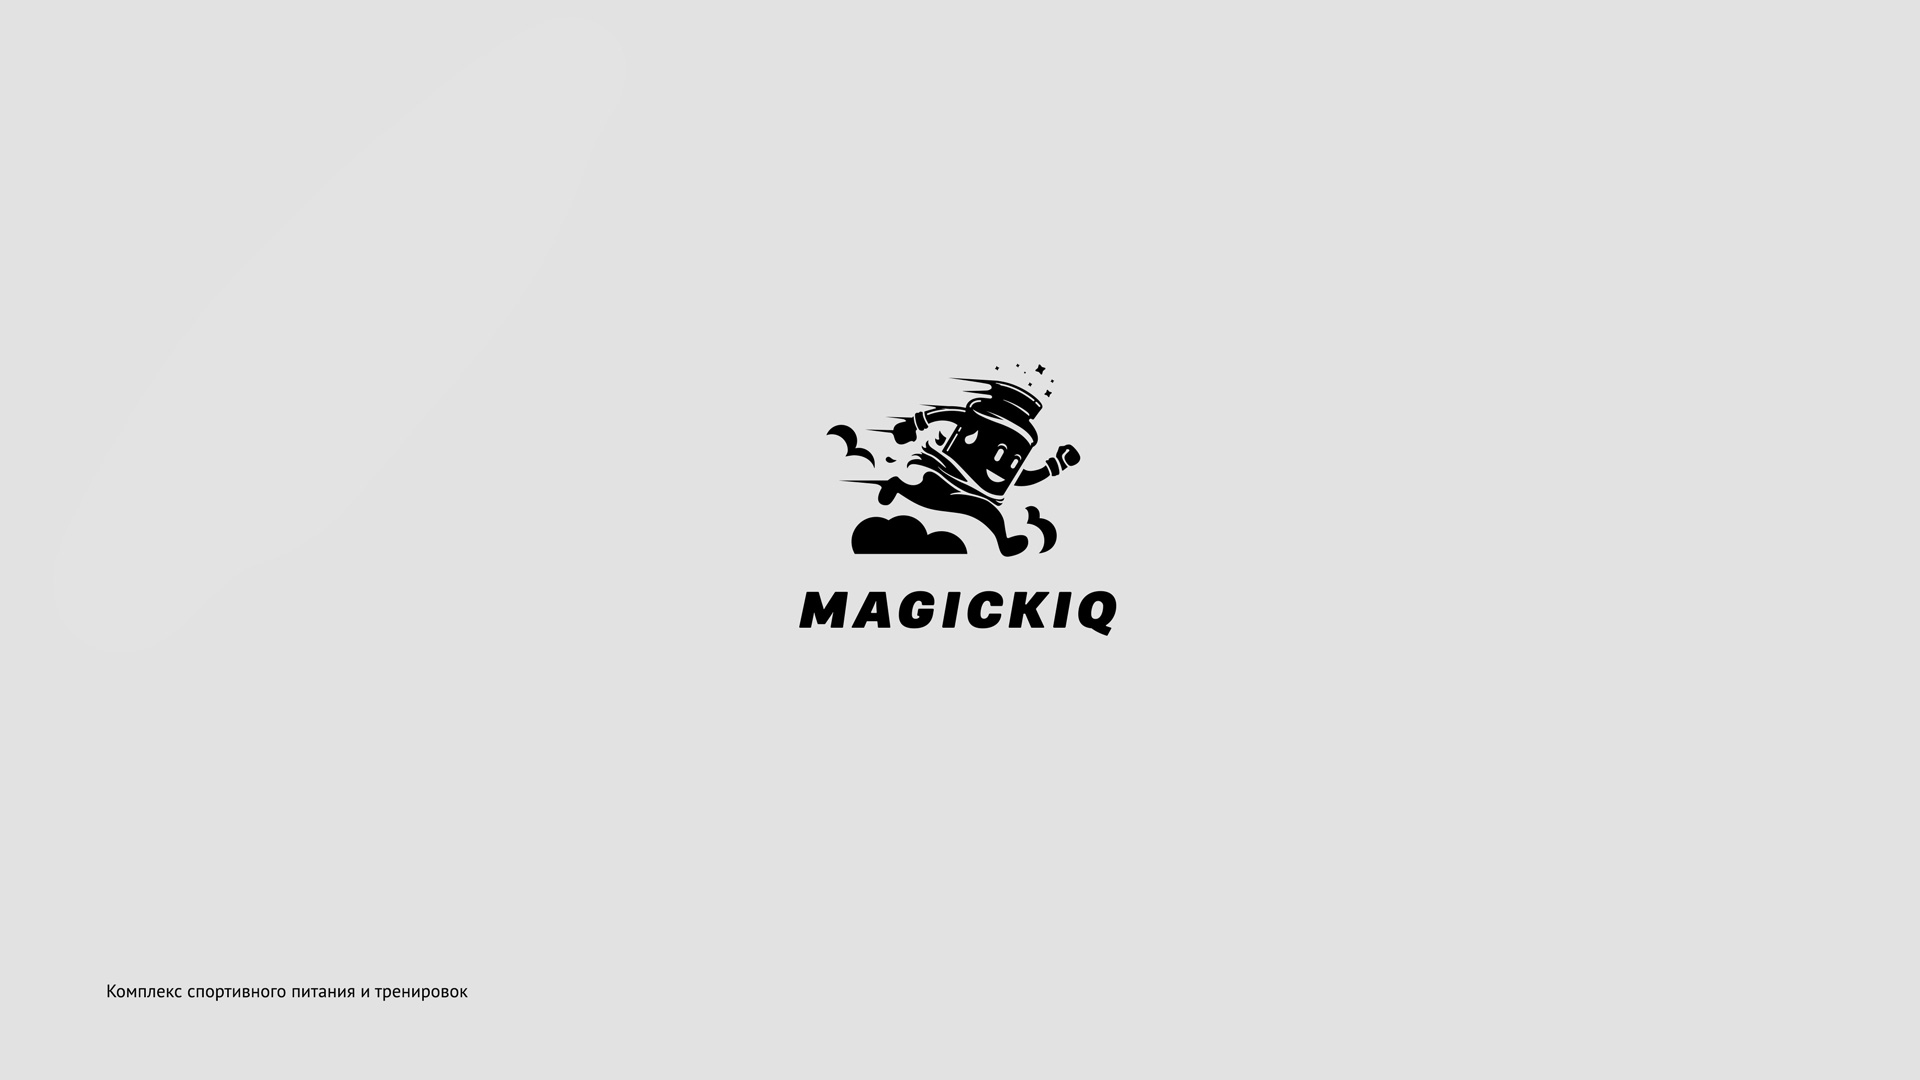 Magickiq